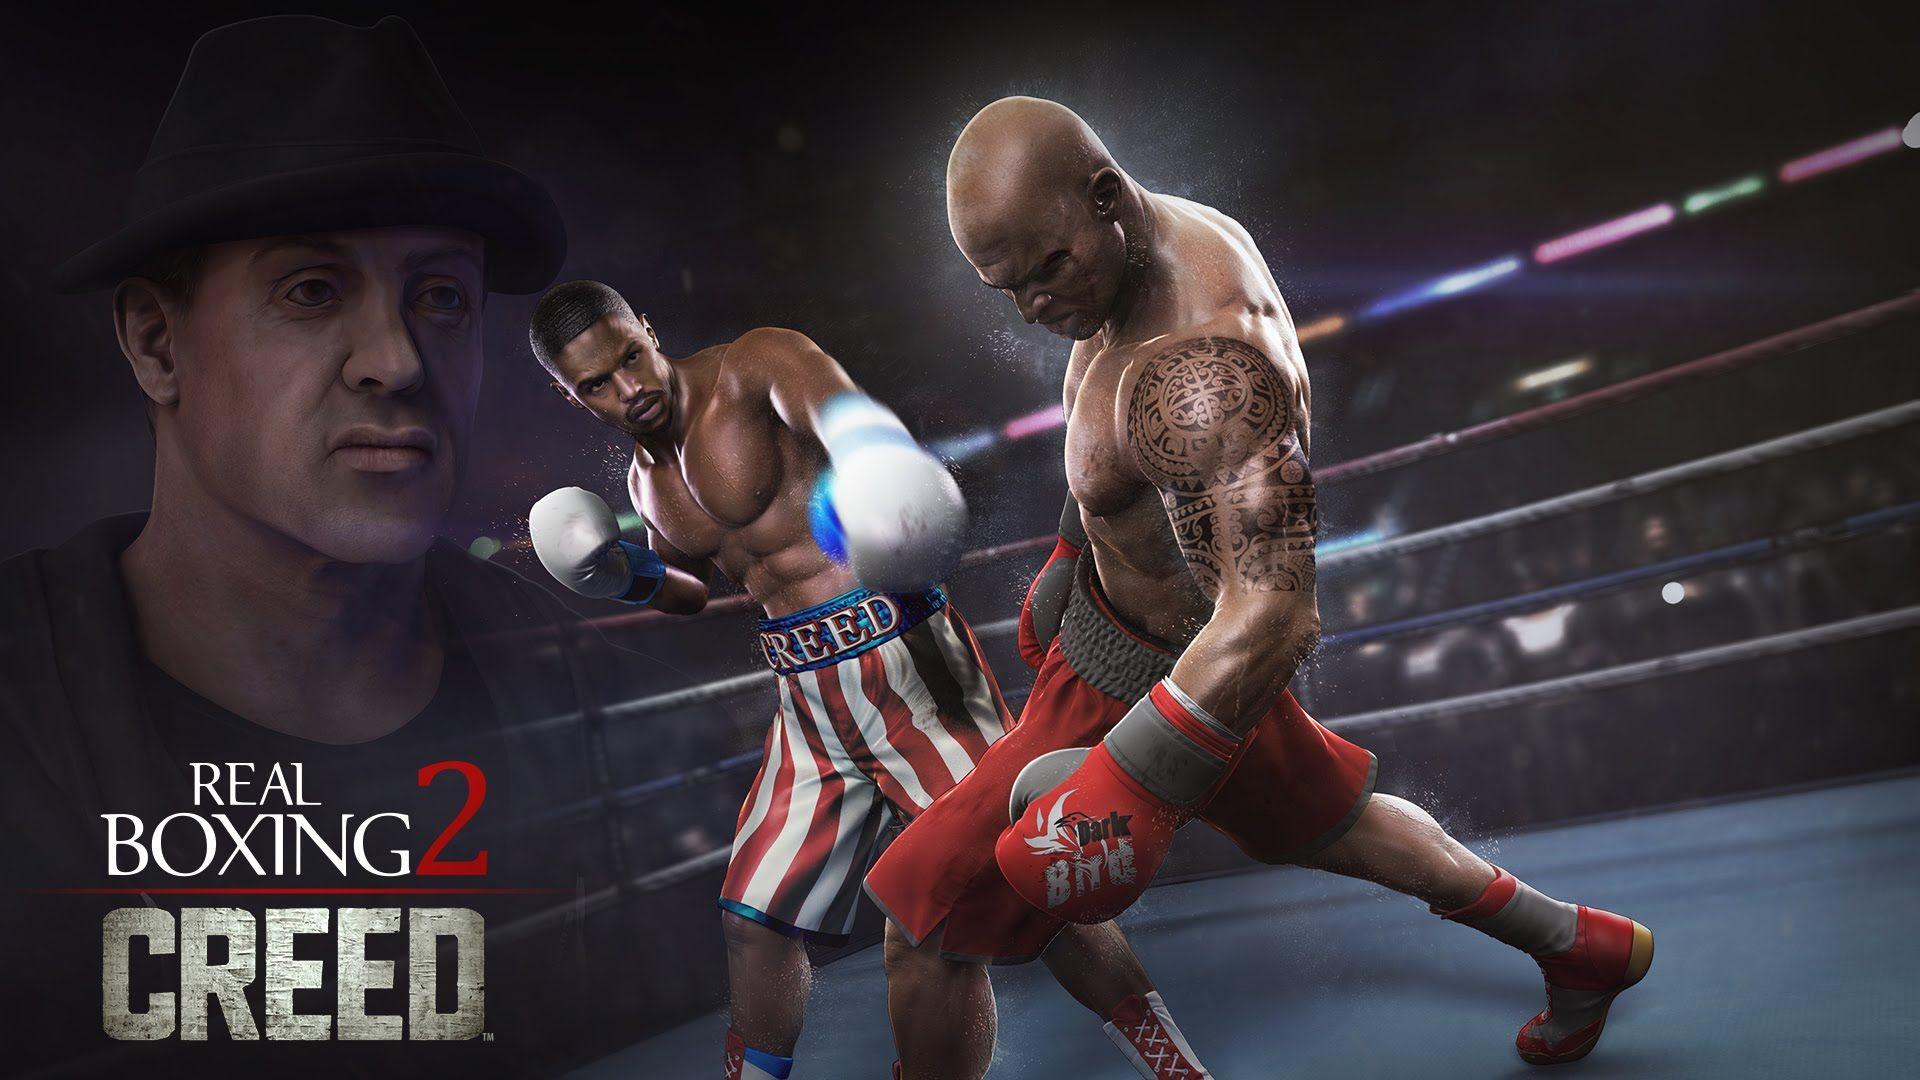 Обзор игр бокс. Real Boxing 2 Creed. Real Boxing 2 боксеры. Real Boxing 2 Rocky (real Boxing 2 Creed)трейлер. Бокс на Xbox Rocky.